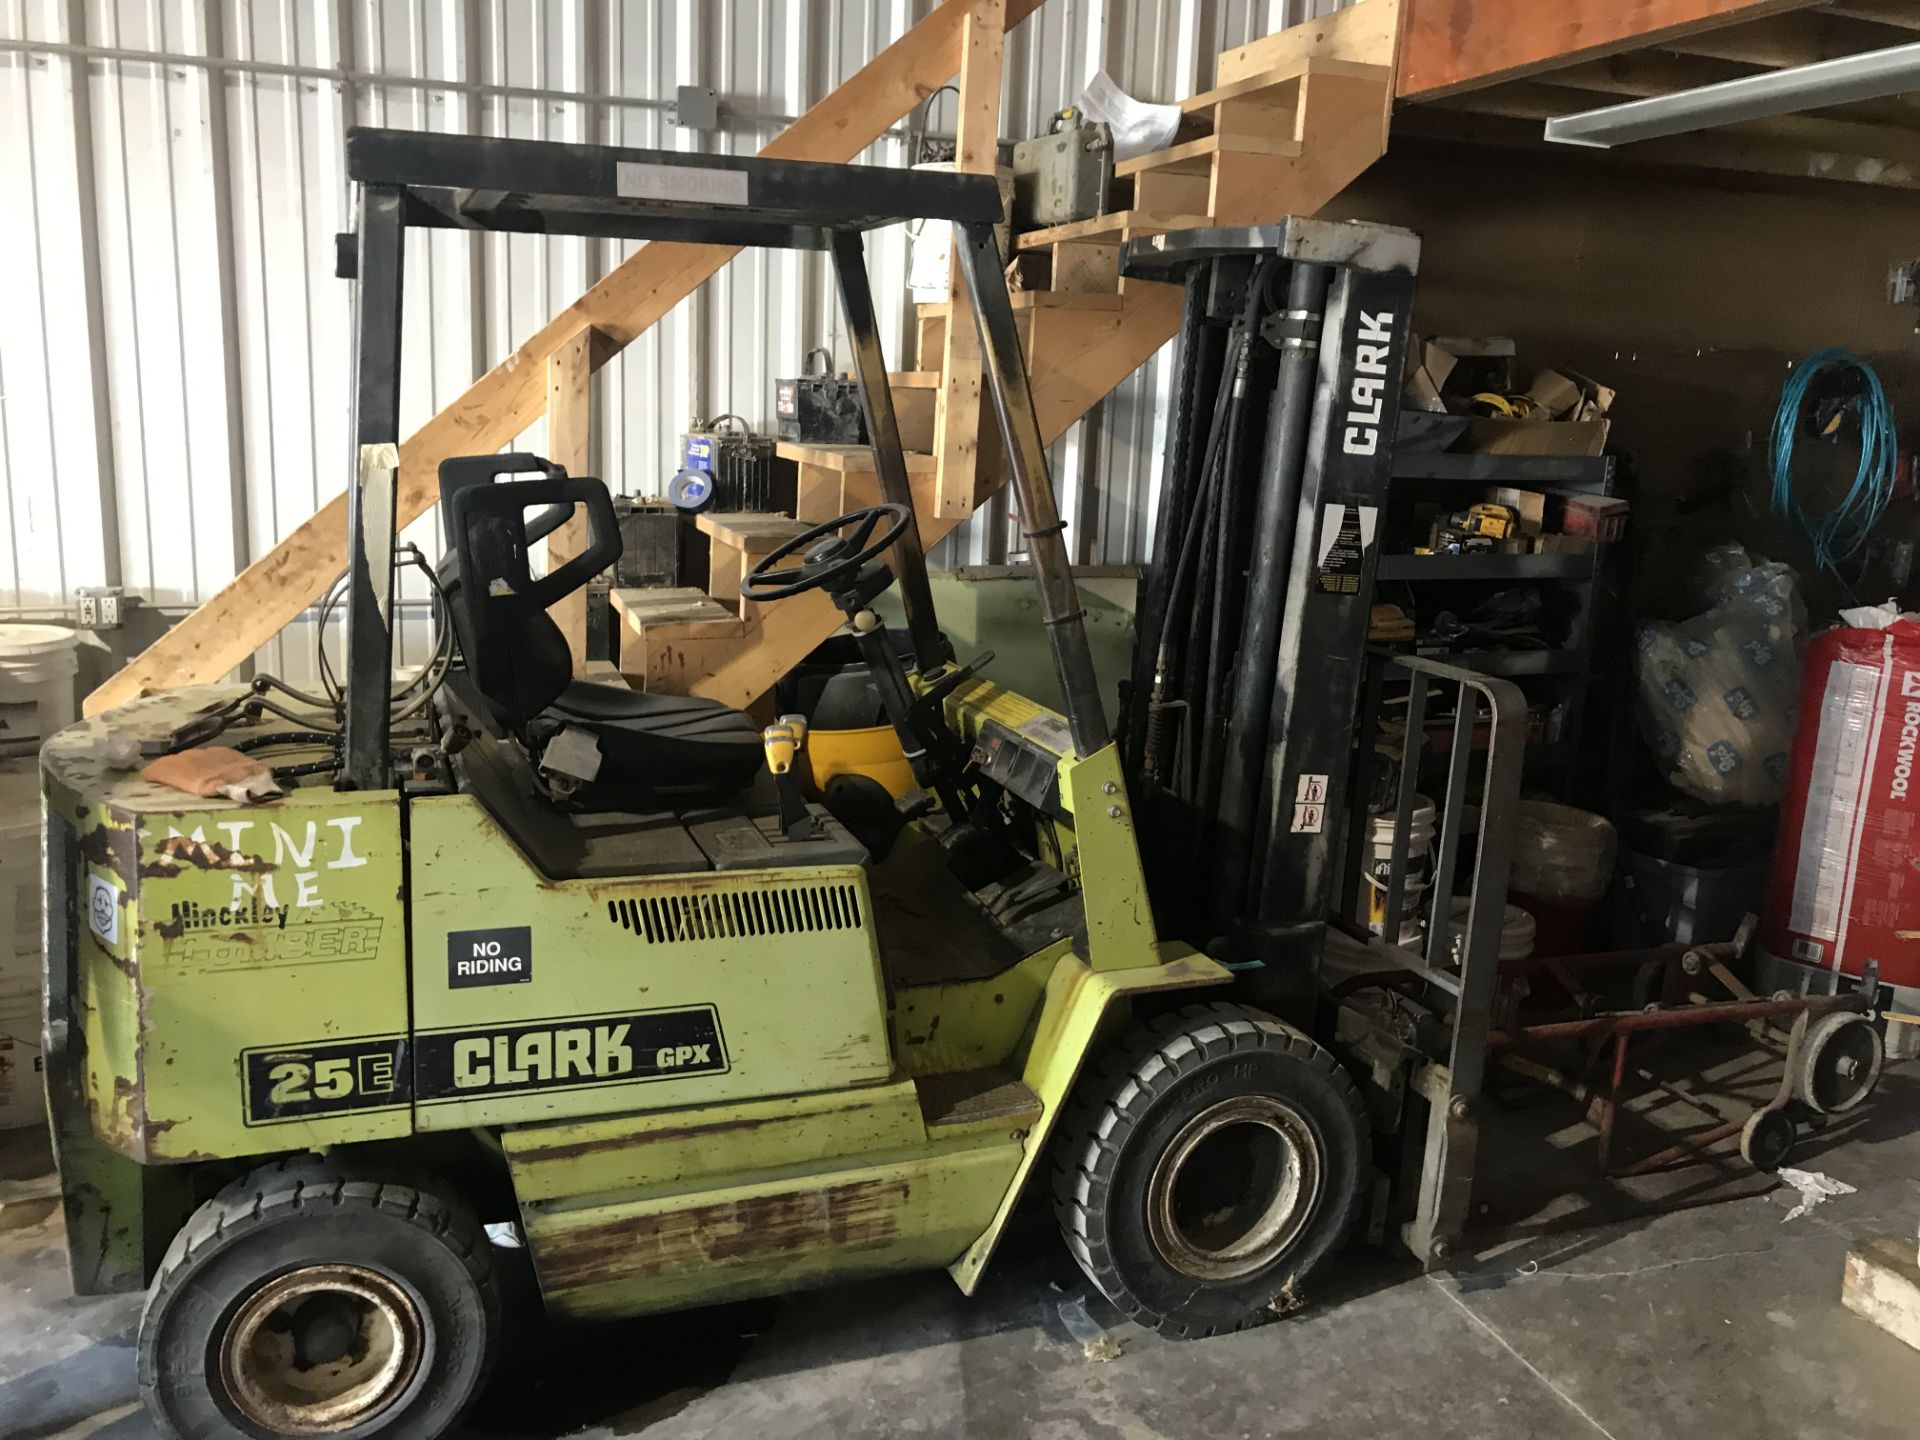 Clark LP Forklift #25E w/3 Stage Mast, Sideshift, Hrs: 8,930 (MACHINE RUNS)